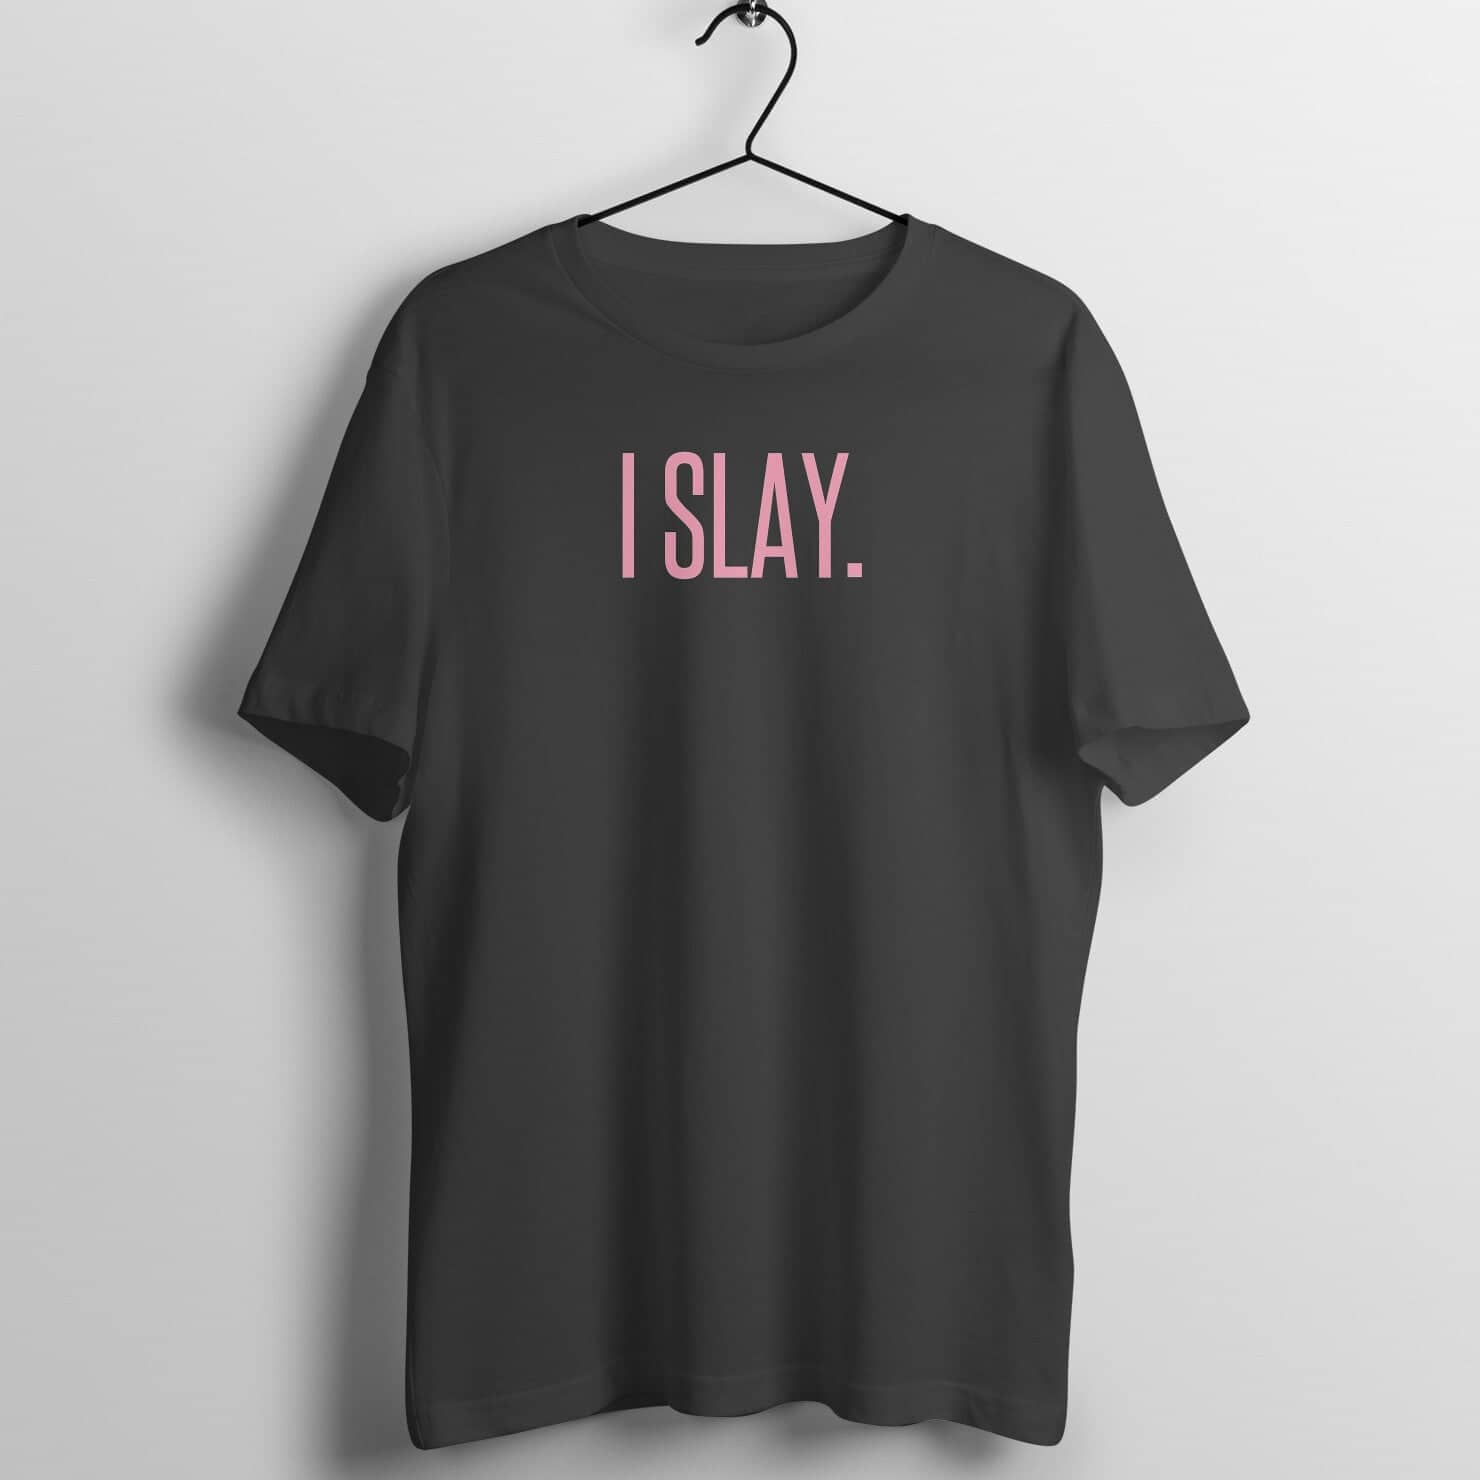 I Slay Exclusive Black T Shirt for Women Shirts & Tops Printrove Black S 